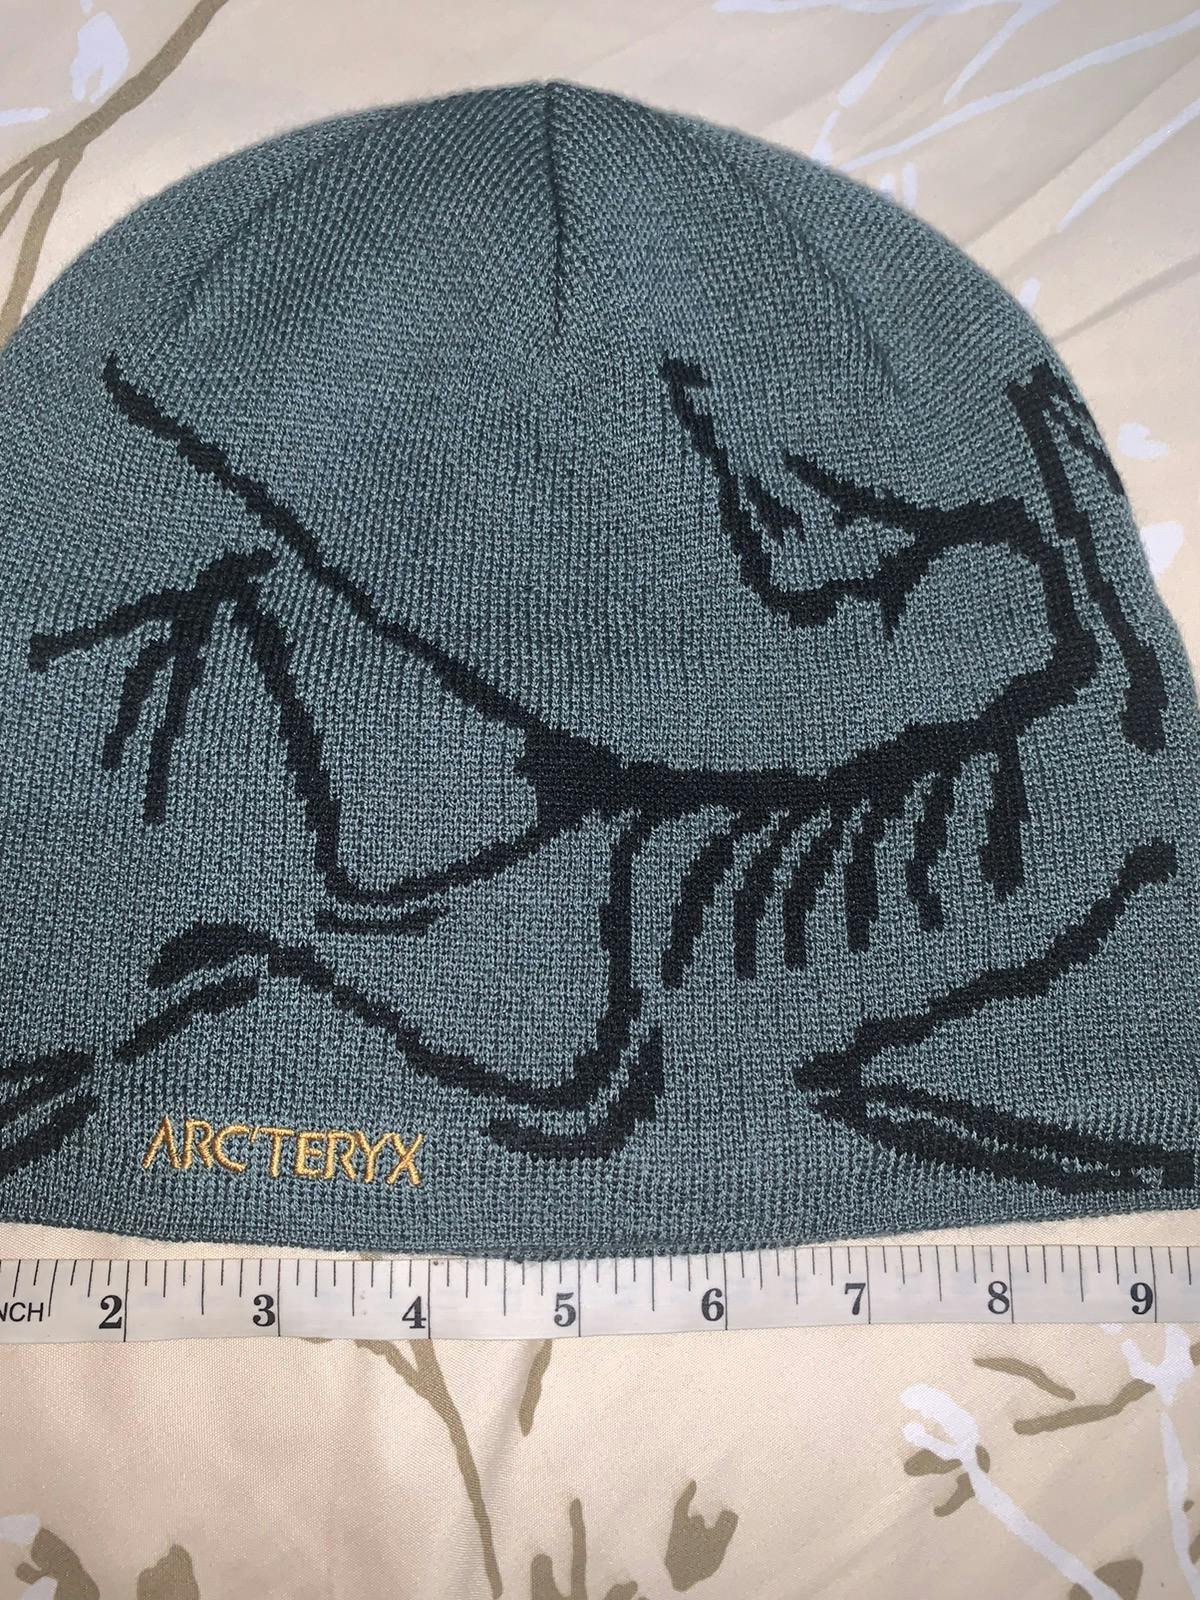 Arcteryx Beanie Hat Bird Head Toque FREE SHIPPING - 3